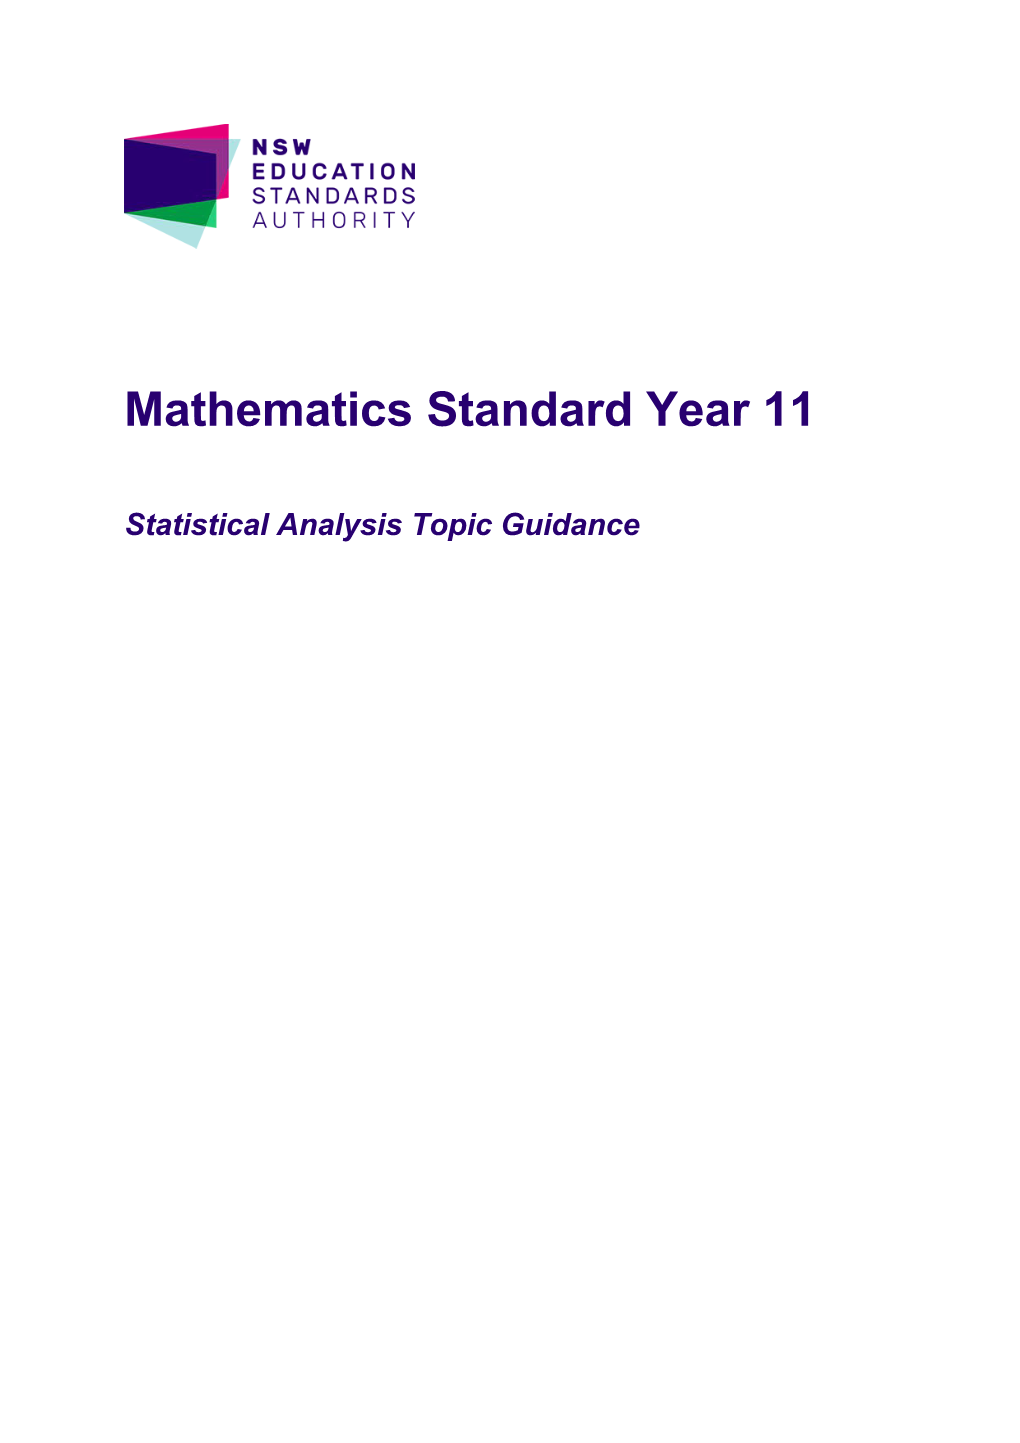 Year 11 Mathematics Standard Topic Guidance: Statistical Analysis